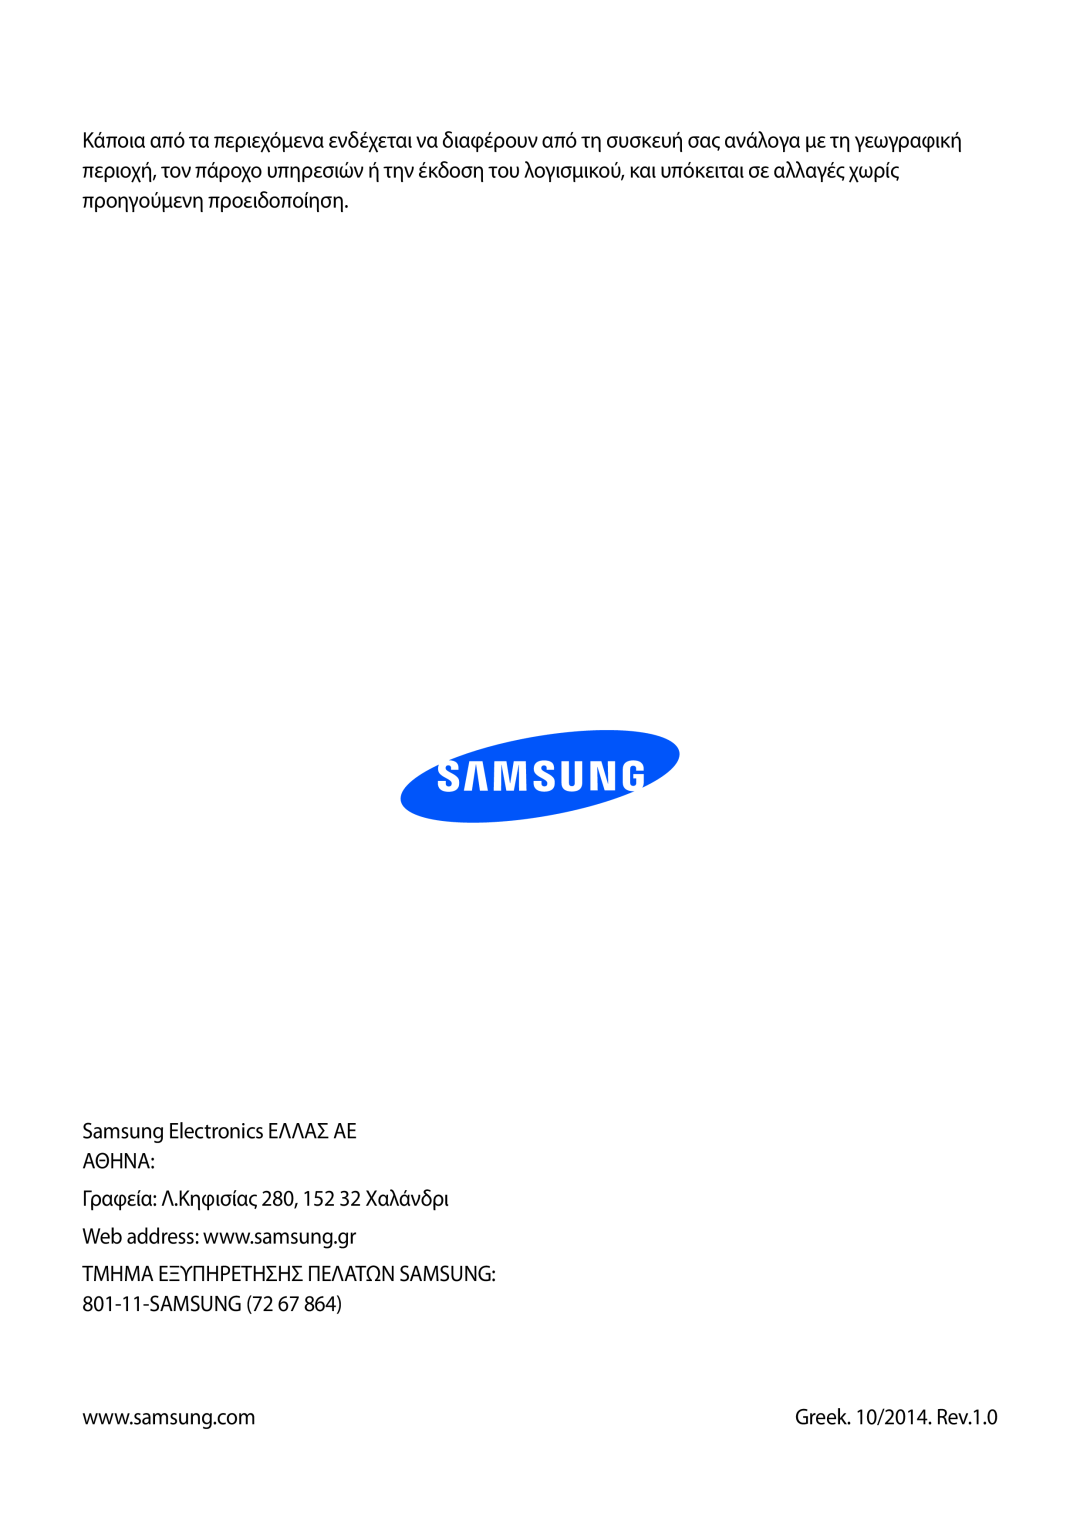 Samsung GT-P5210MKAEUR, GT-P5210ZWAEUR manual Samsung Electronics ΕΛΛΑΣ ΑΕ ΑΘΗΝΑ, Γραφεία Λ.Κηφισίας 280, 152 32 Χαλάνδρι 